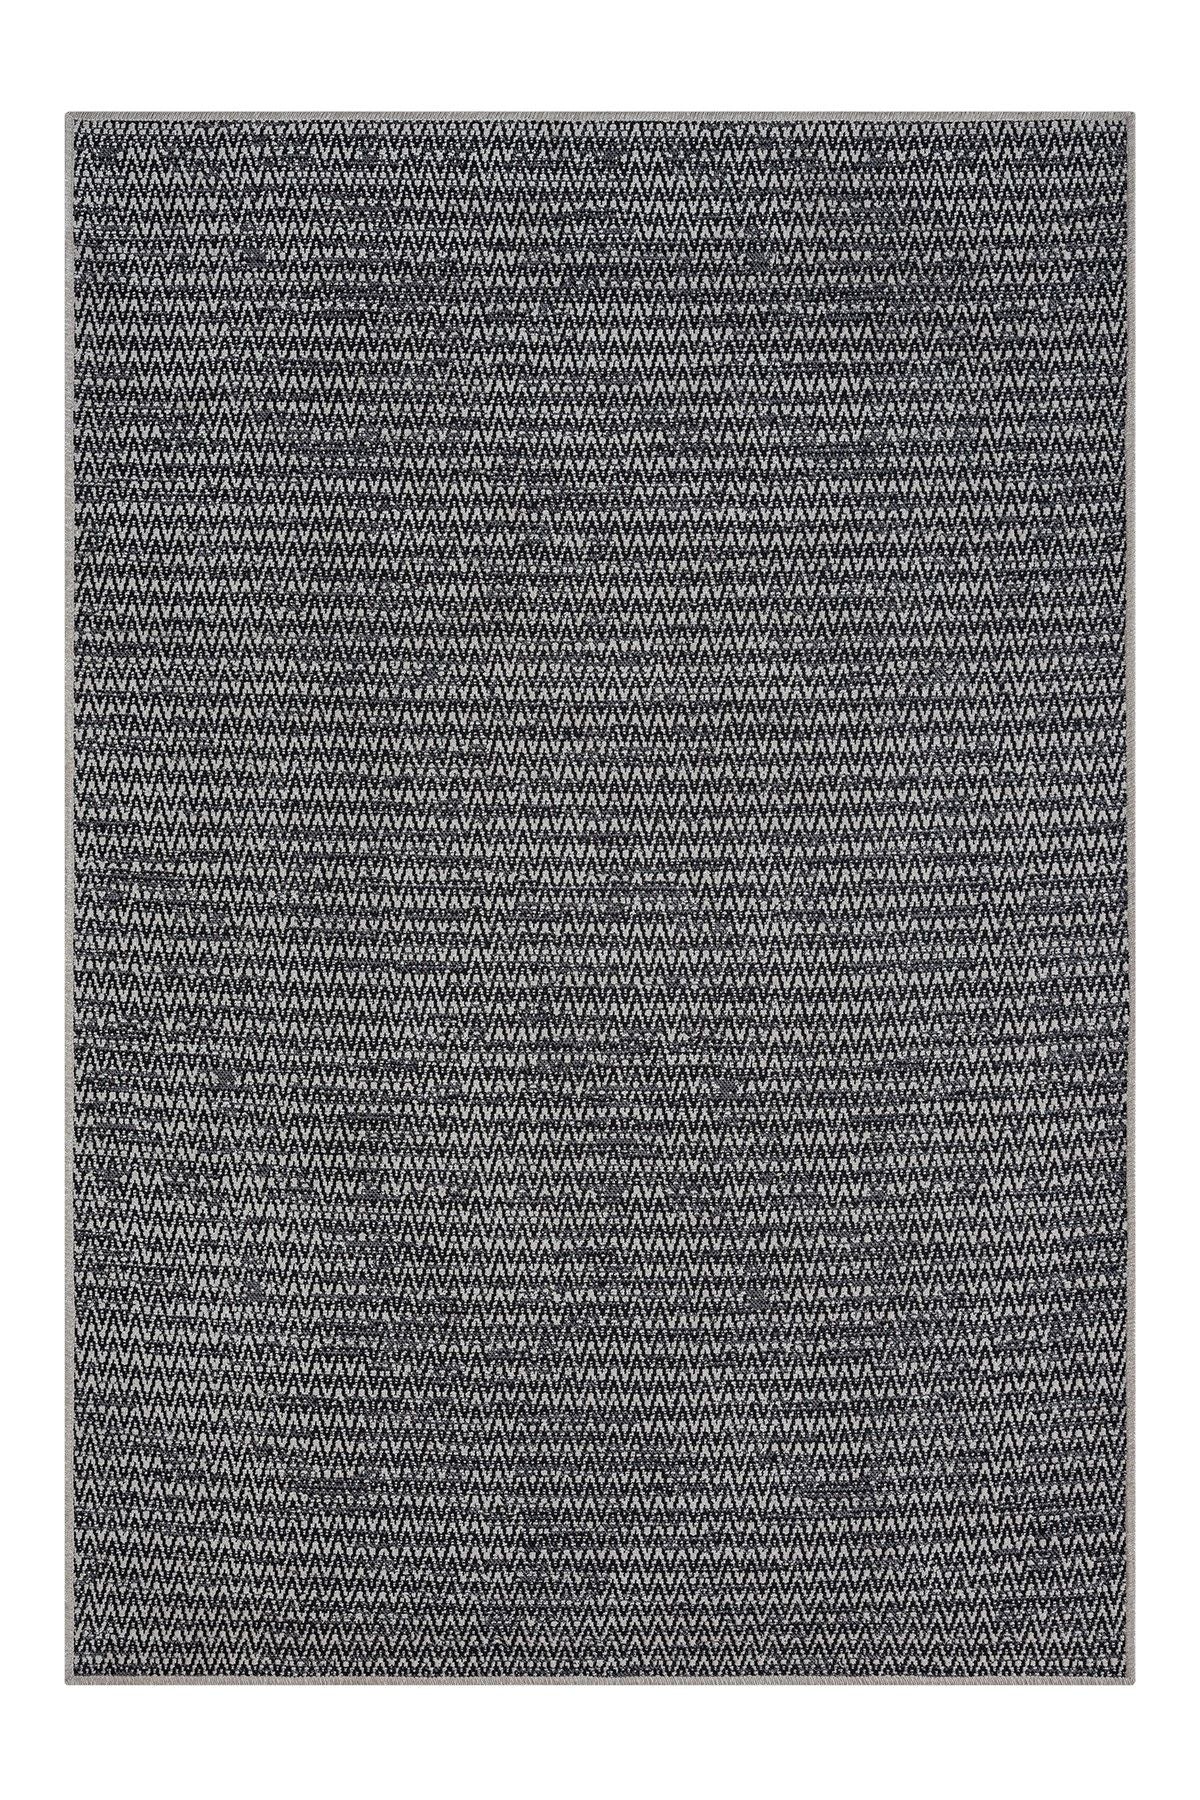 Terapia 3609 - Carpet (80 x 150)